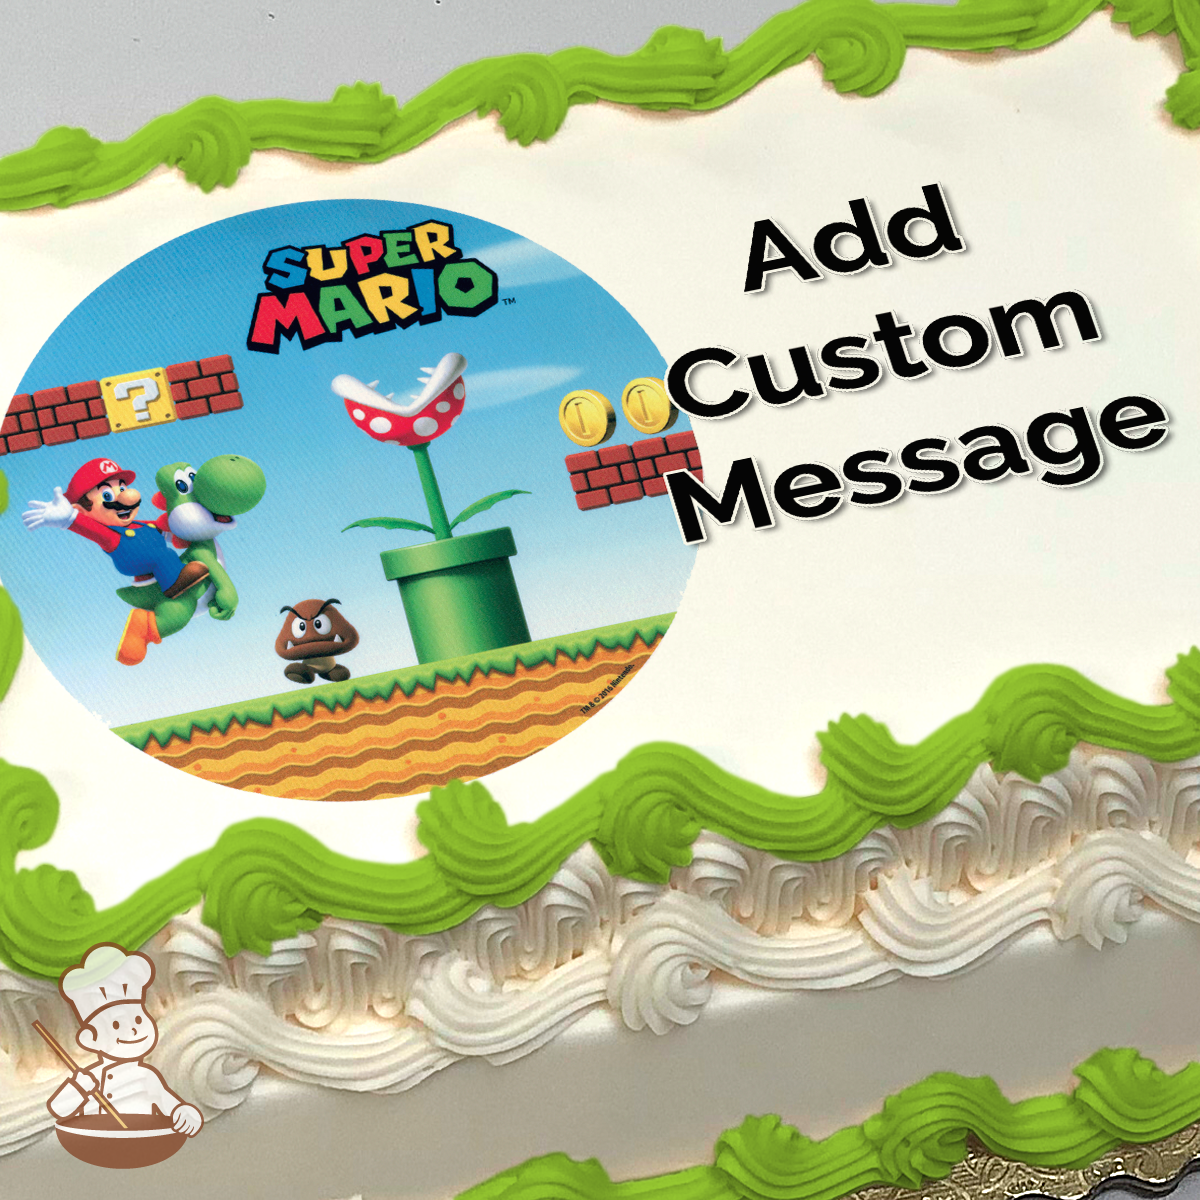 Super Mario Mushroom Kingdom Cake